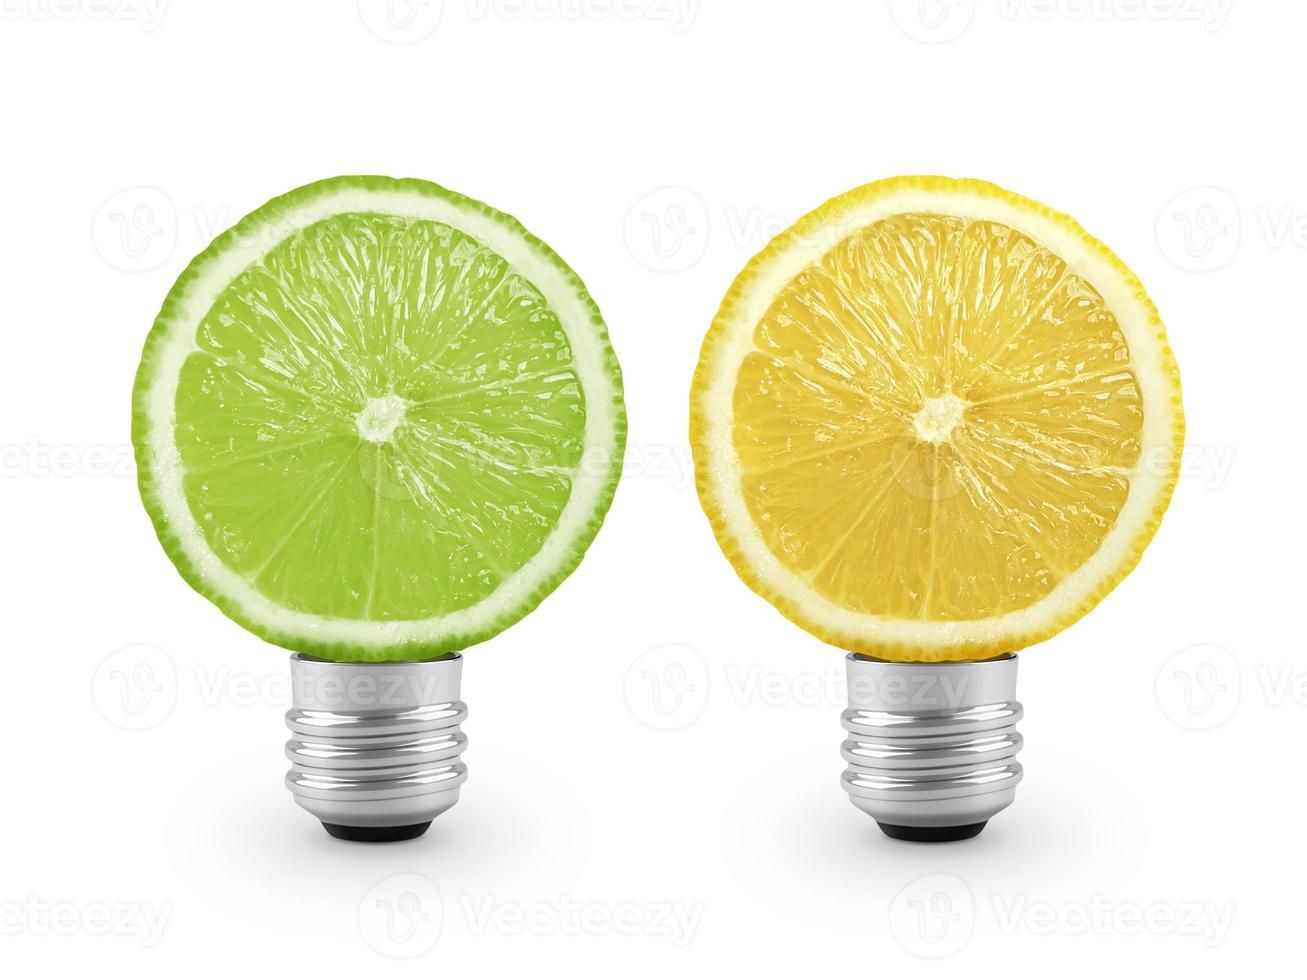 Lemon light bulb on white background. health and beauty concept photo